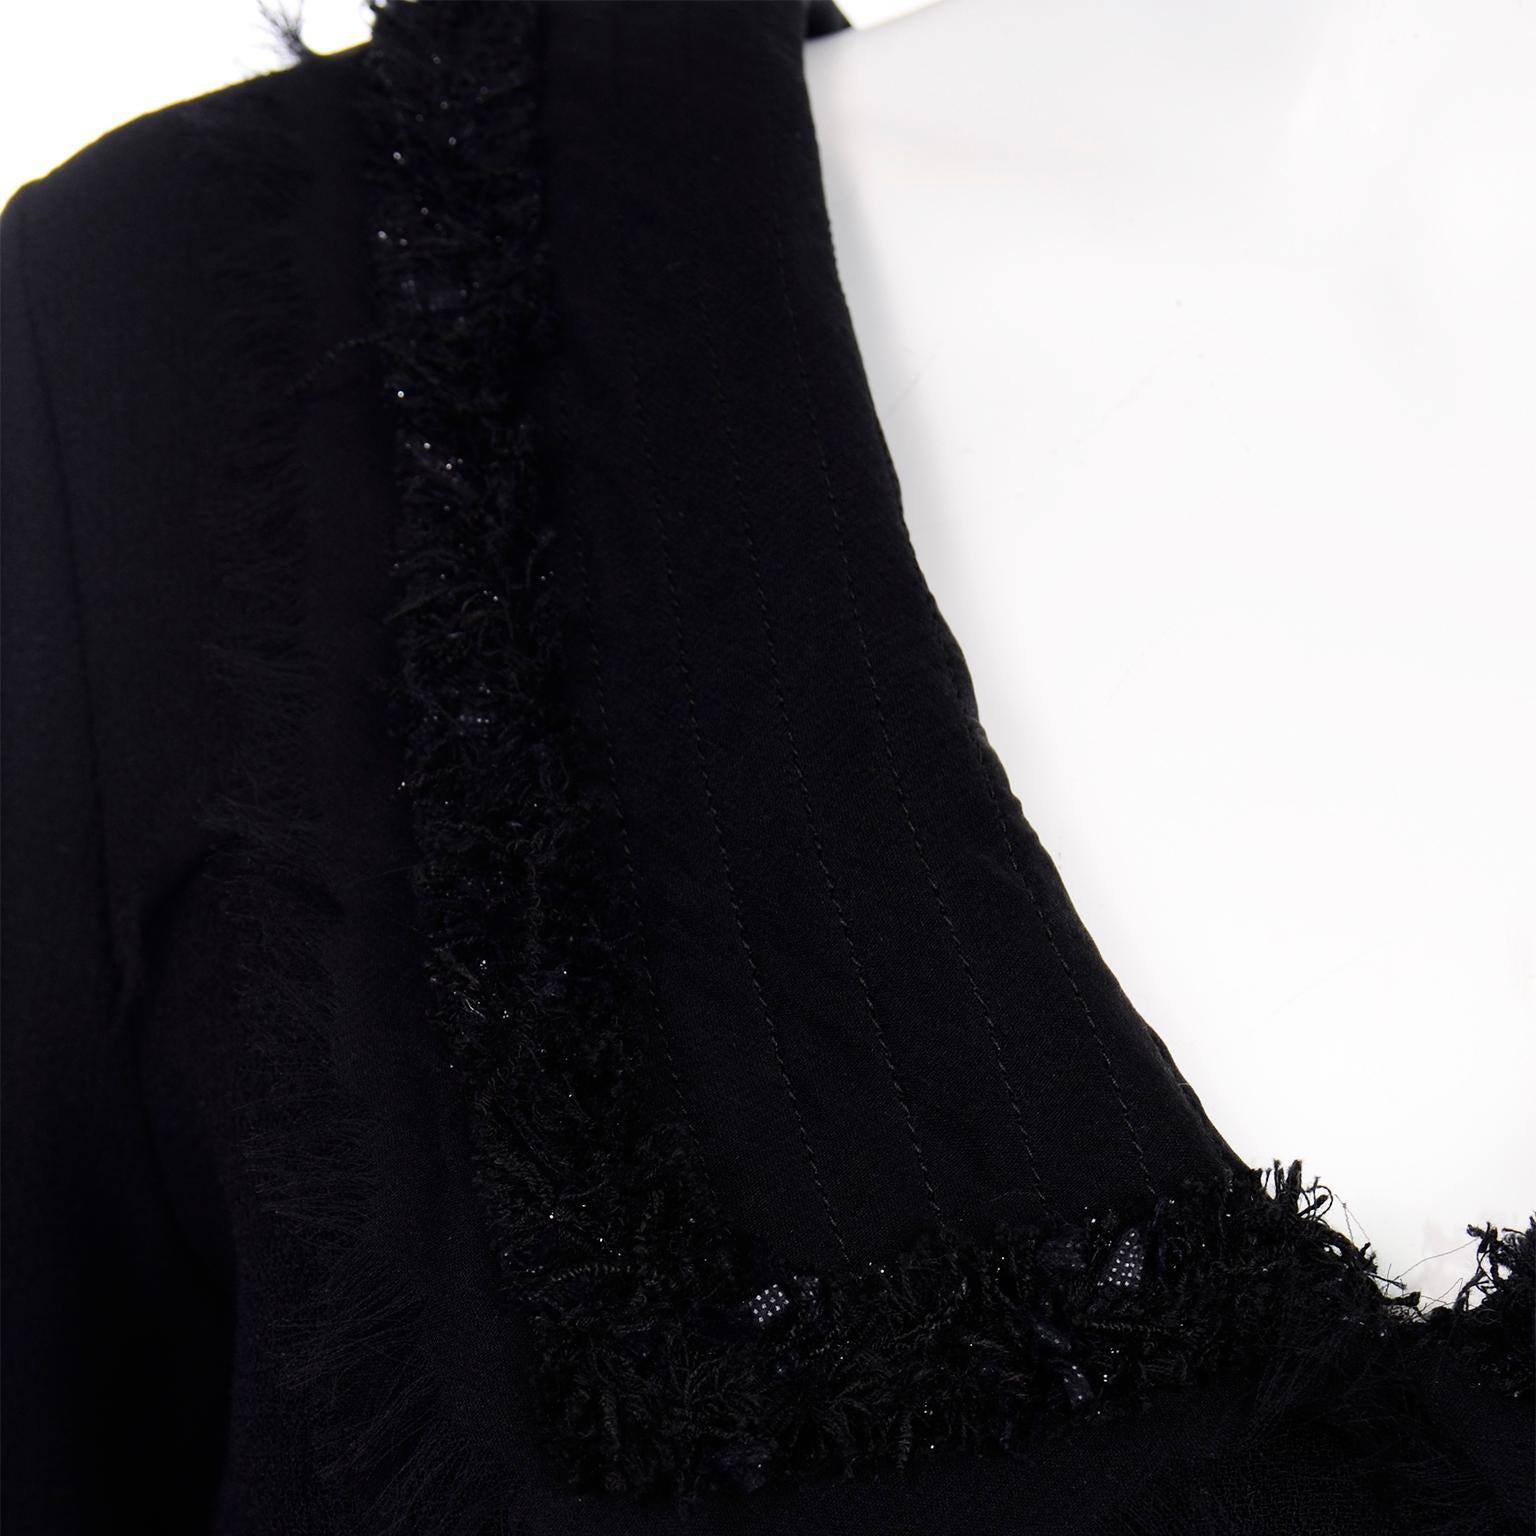 Oscar de la Renta Fall 2010 Black Dress With Raw Edges & Sheer Panel Pleating For Sale 2